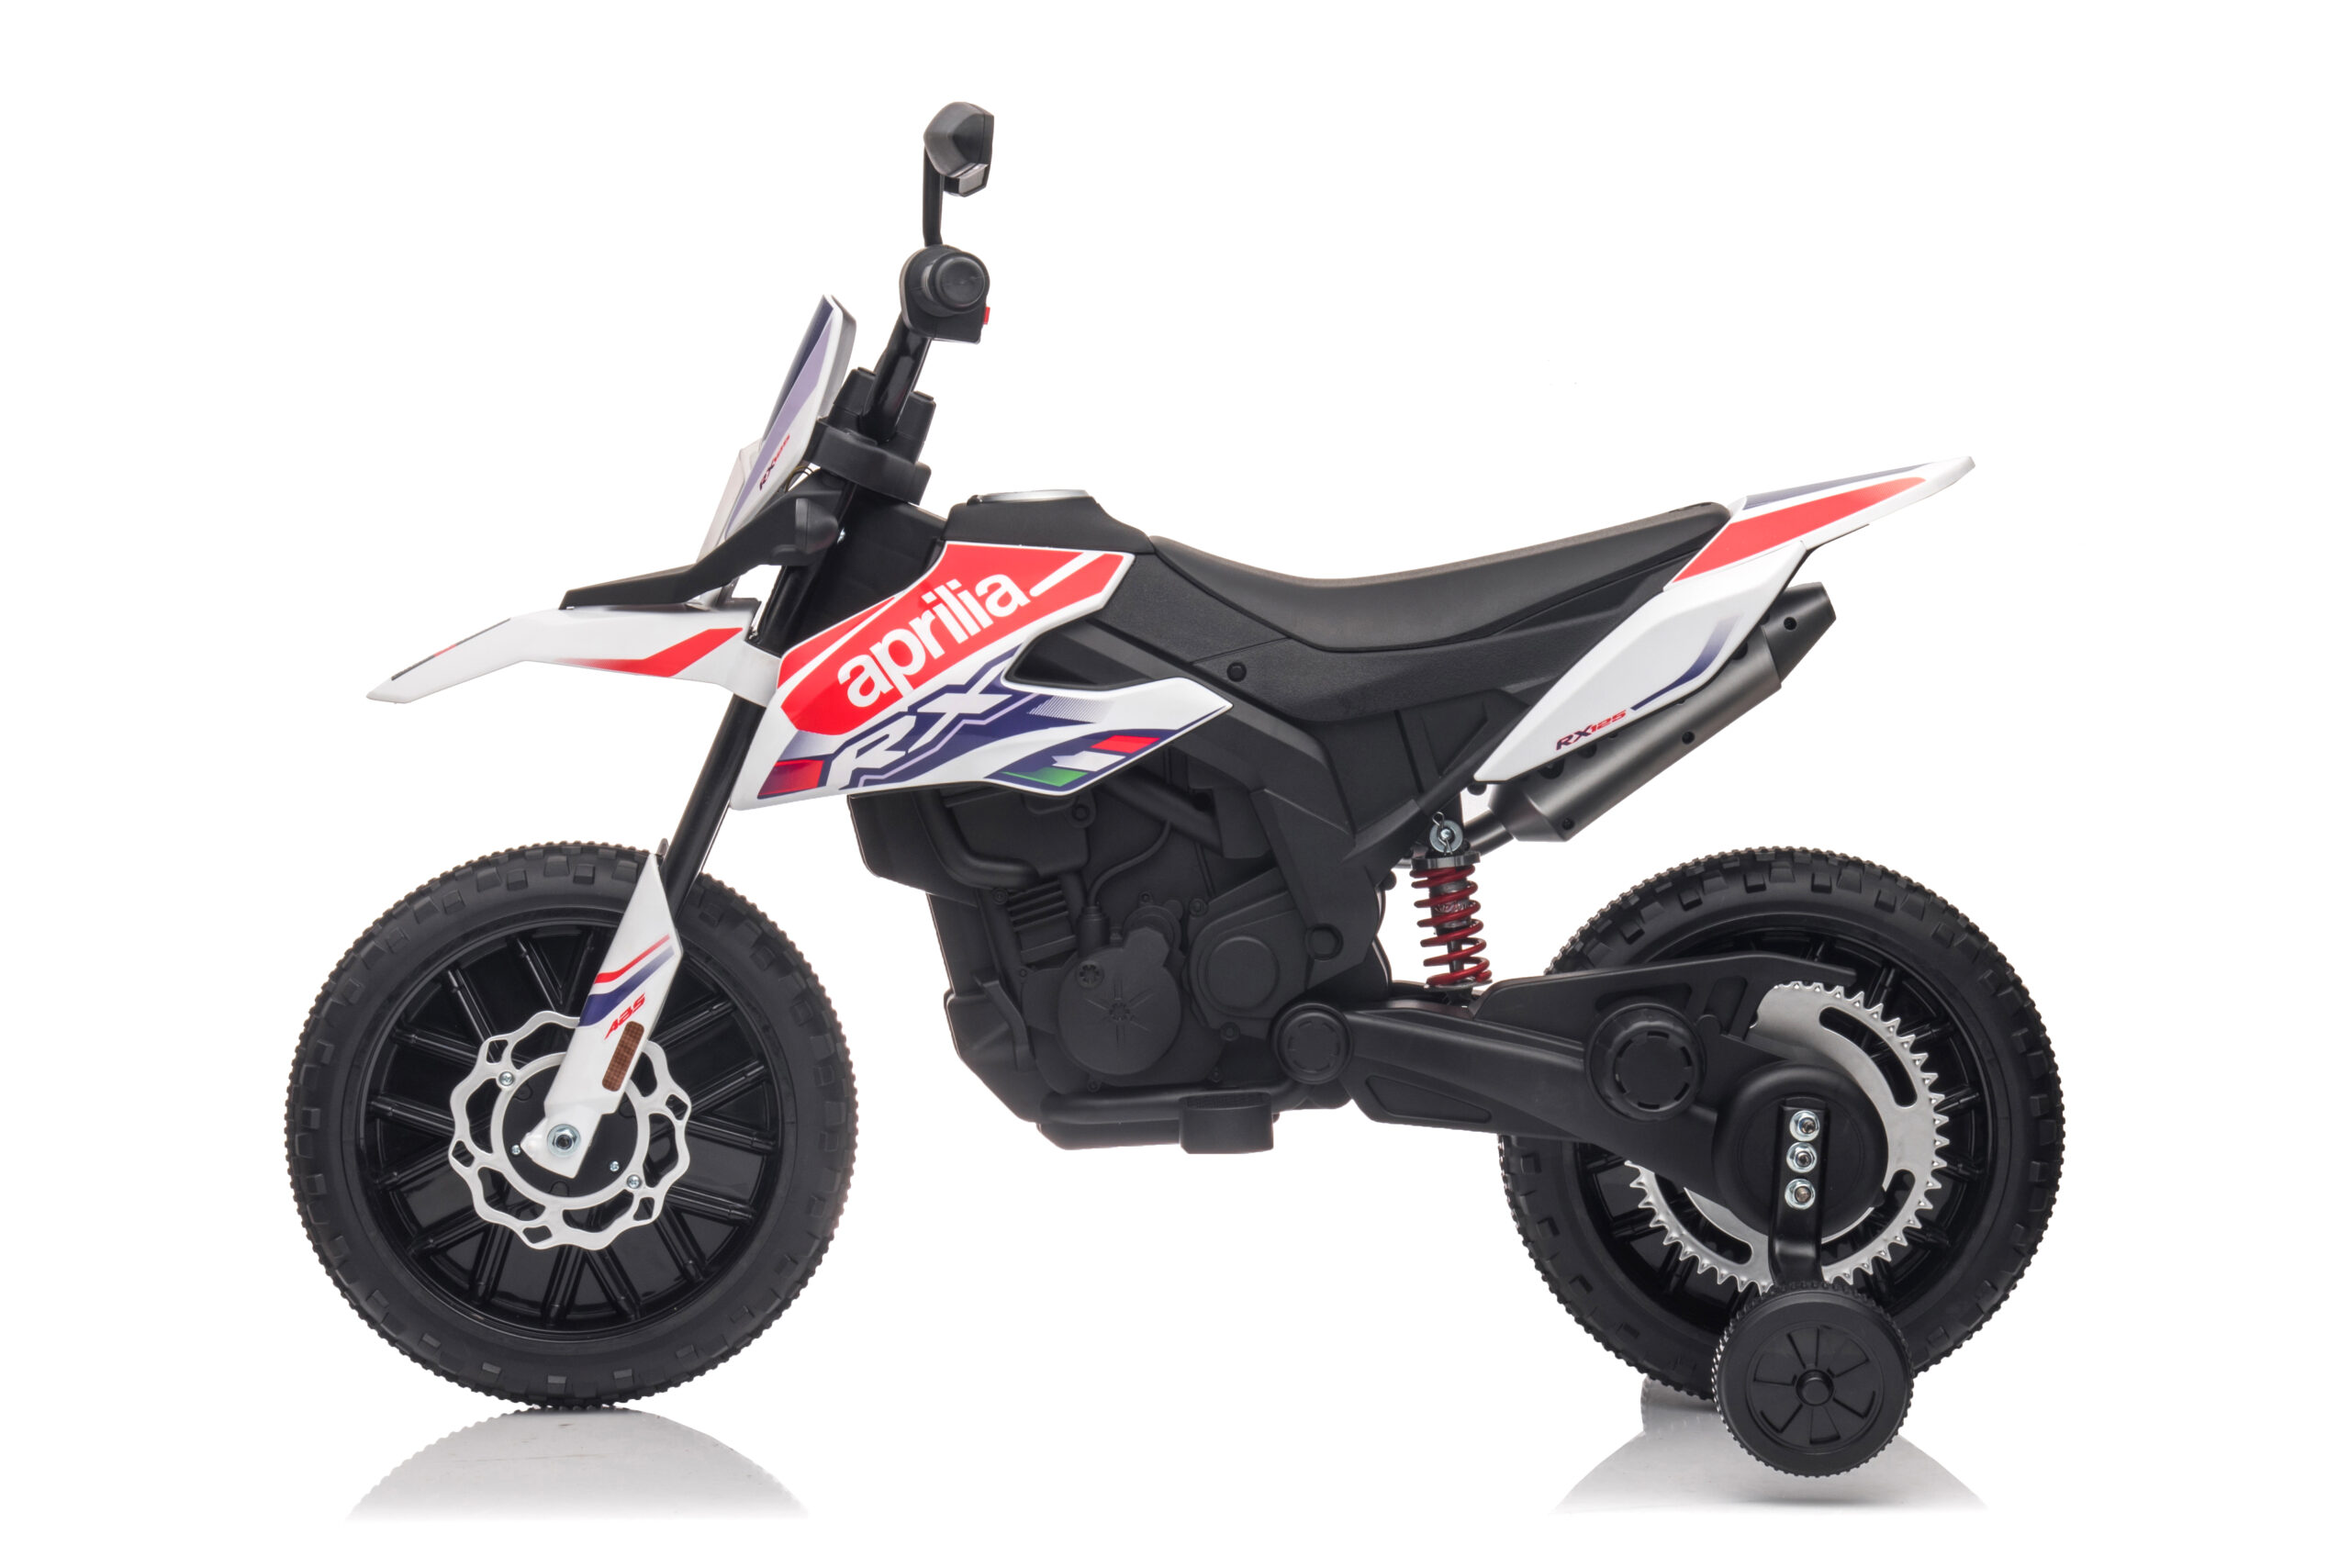 Aprilia motocross rx125 bianca - 